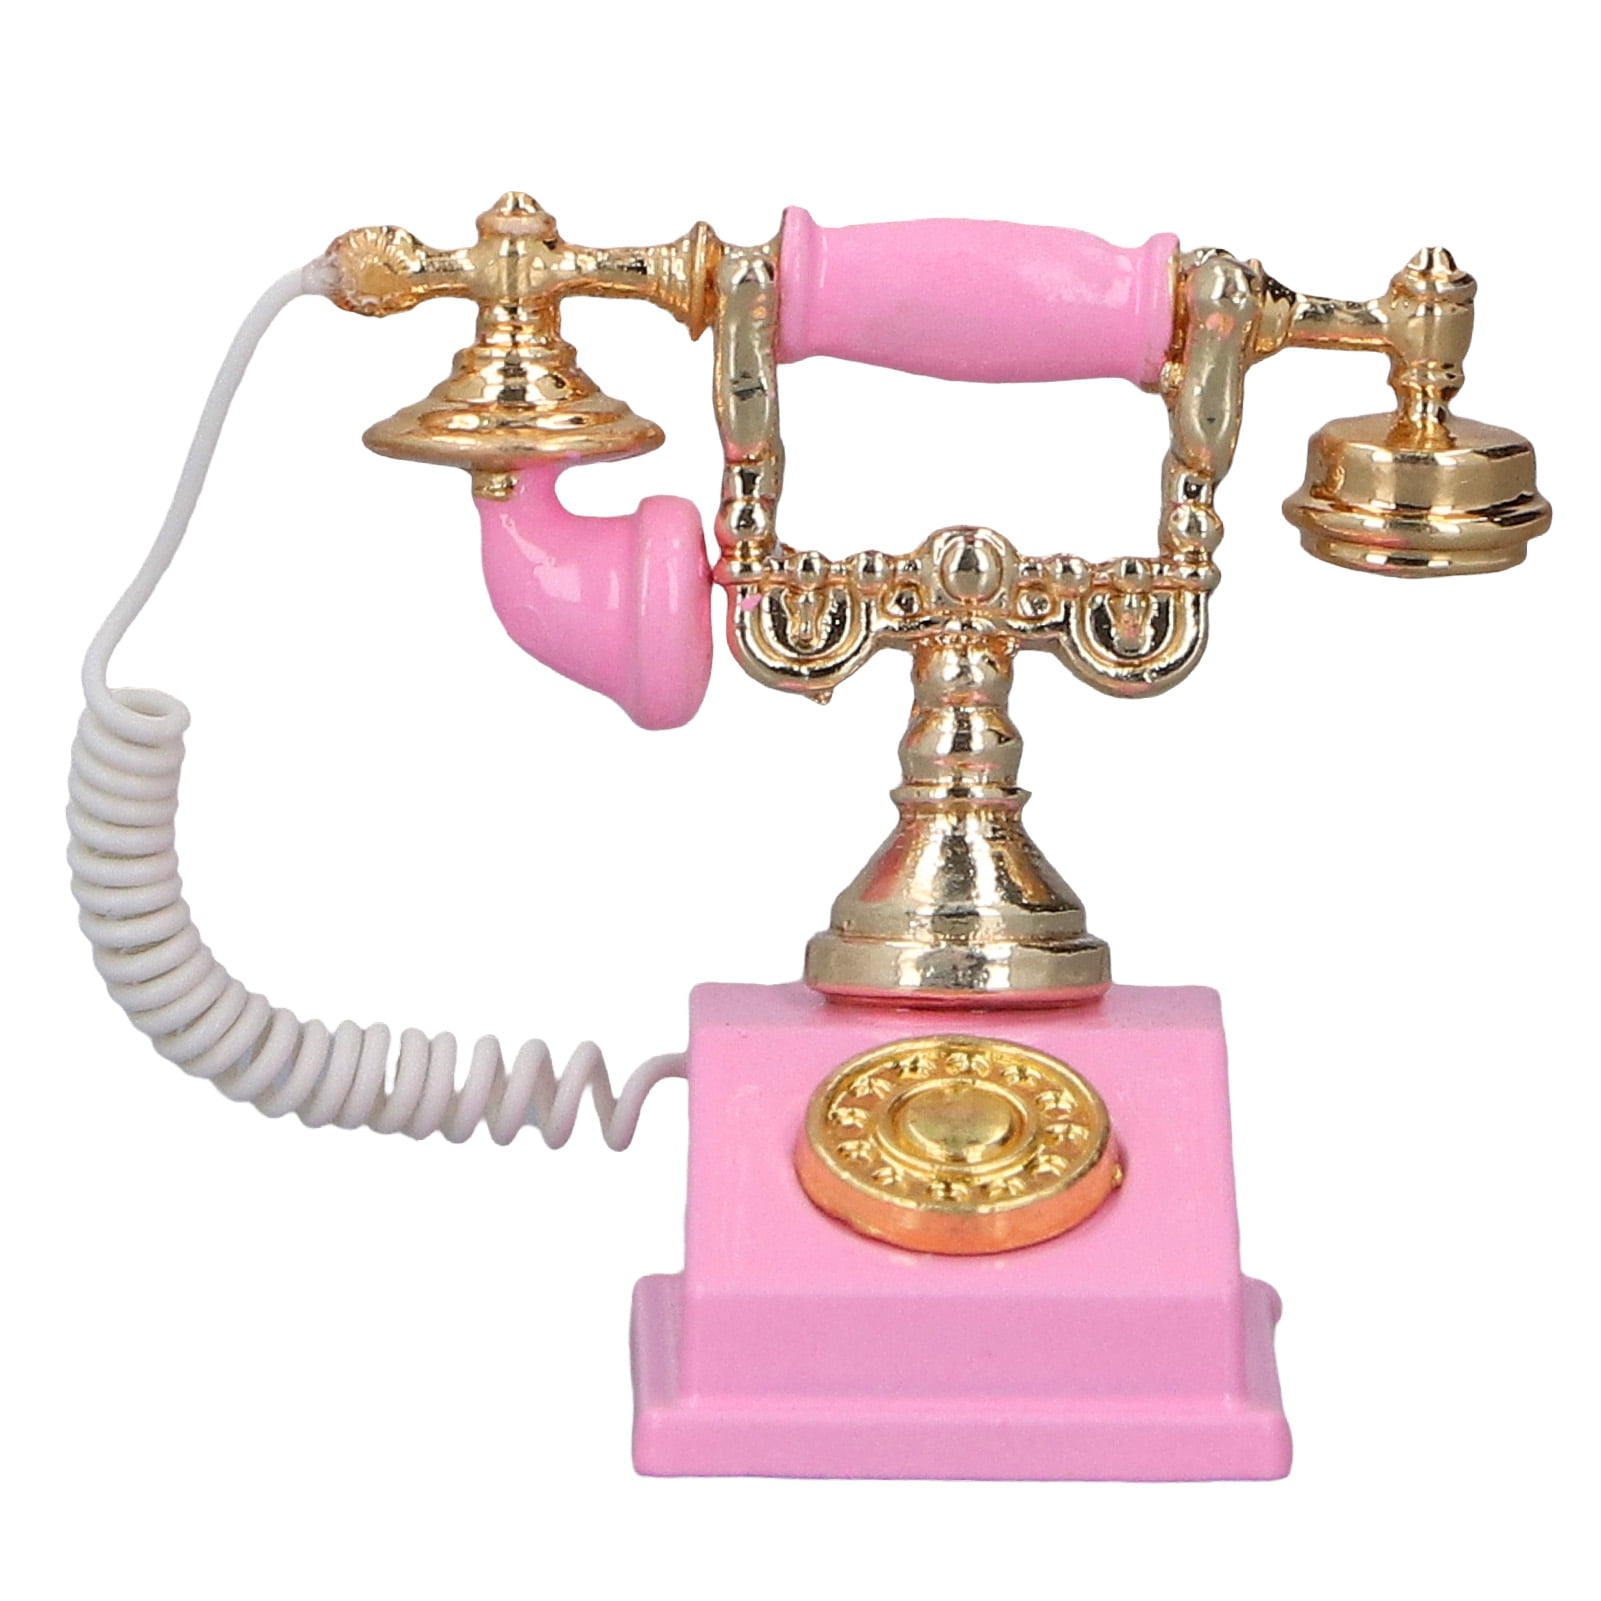 Retro vintage style Black Phone Telephone 1/12 Toy Dollhouse Miniature Accessory 